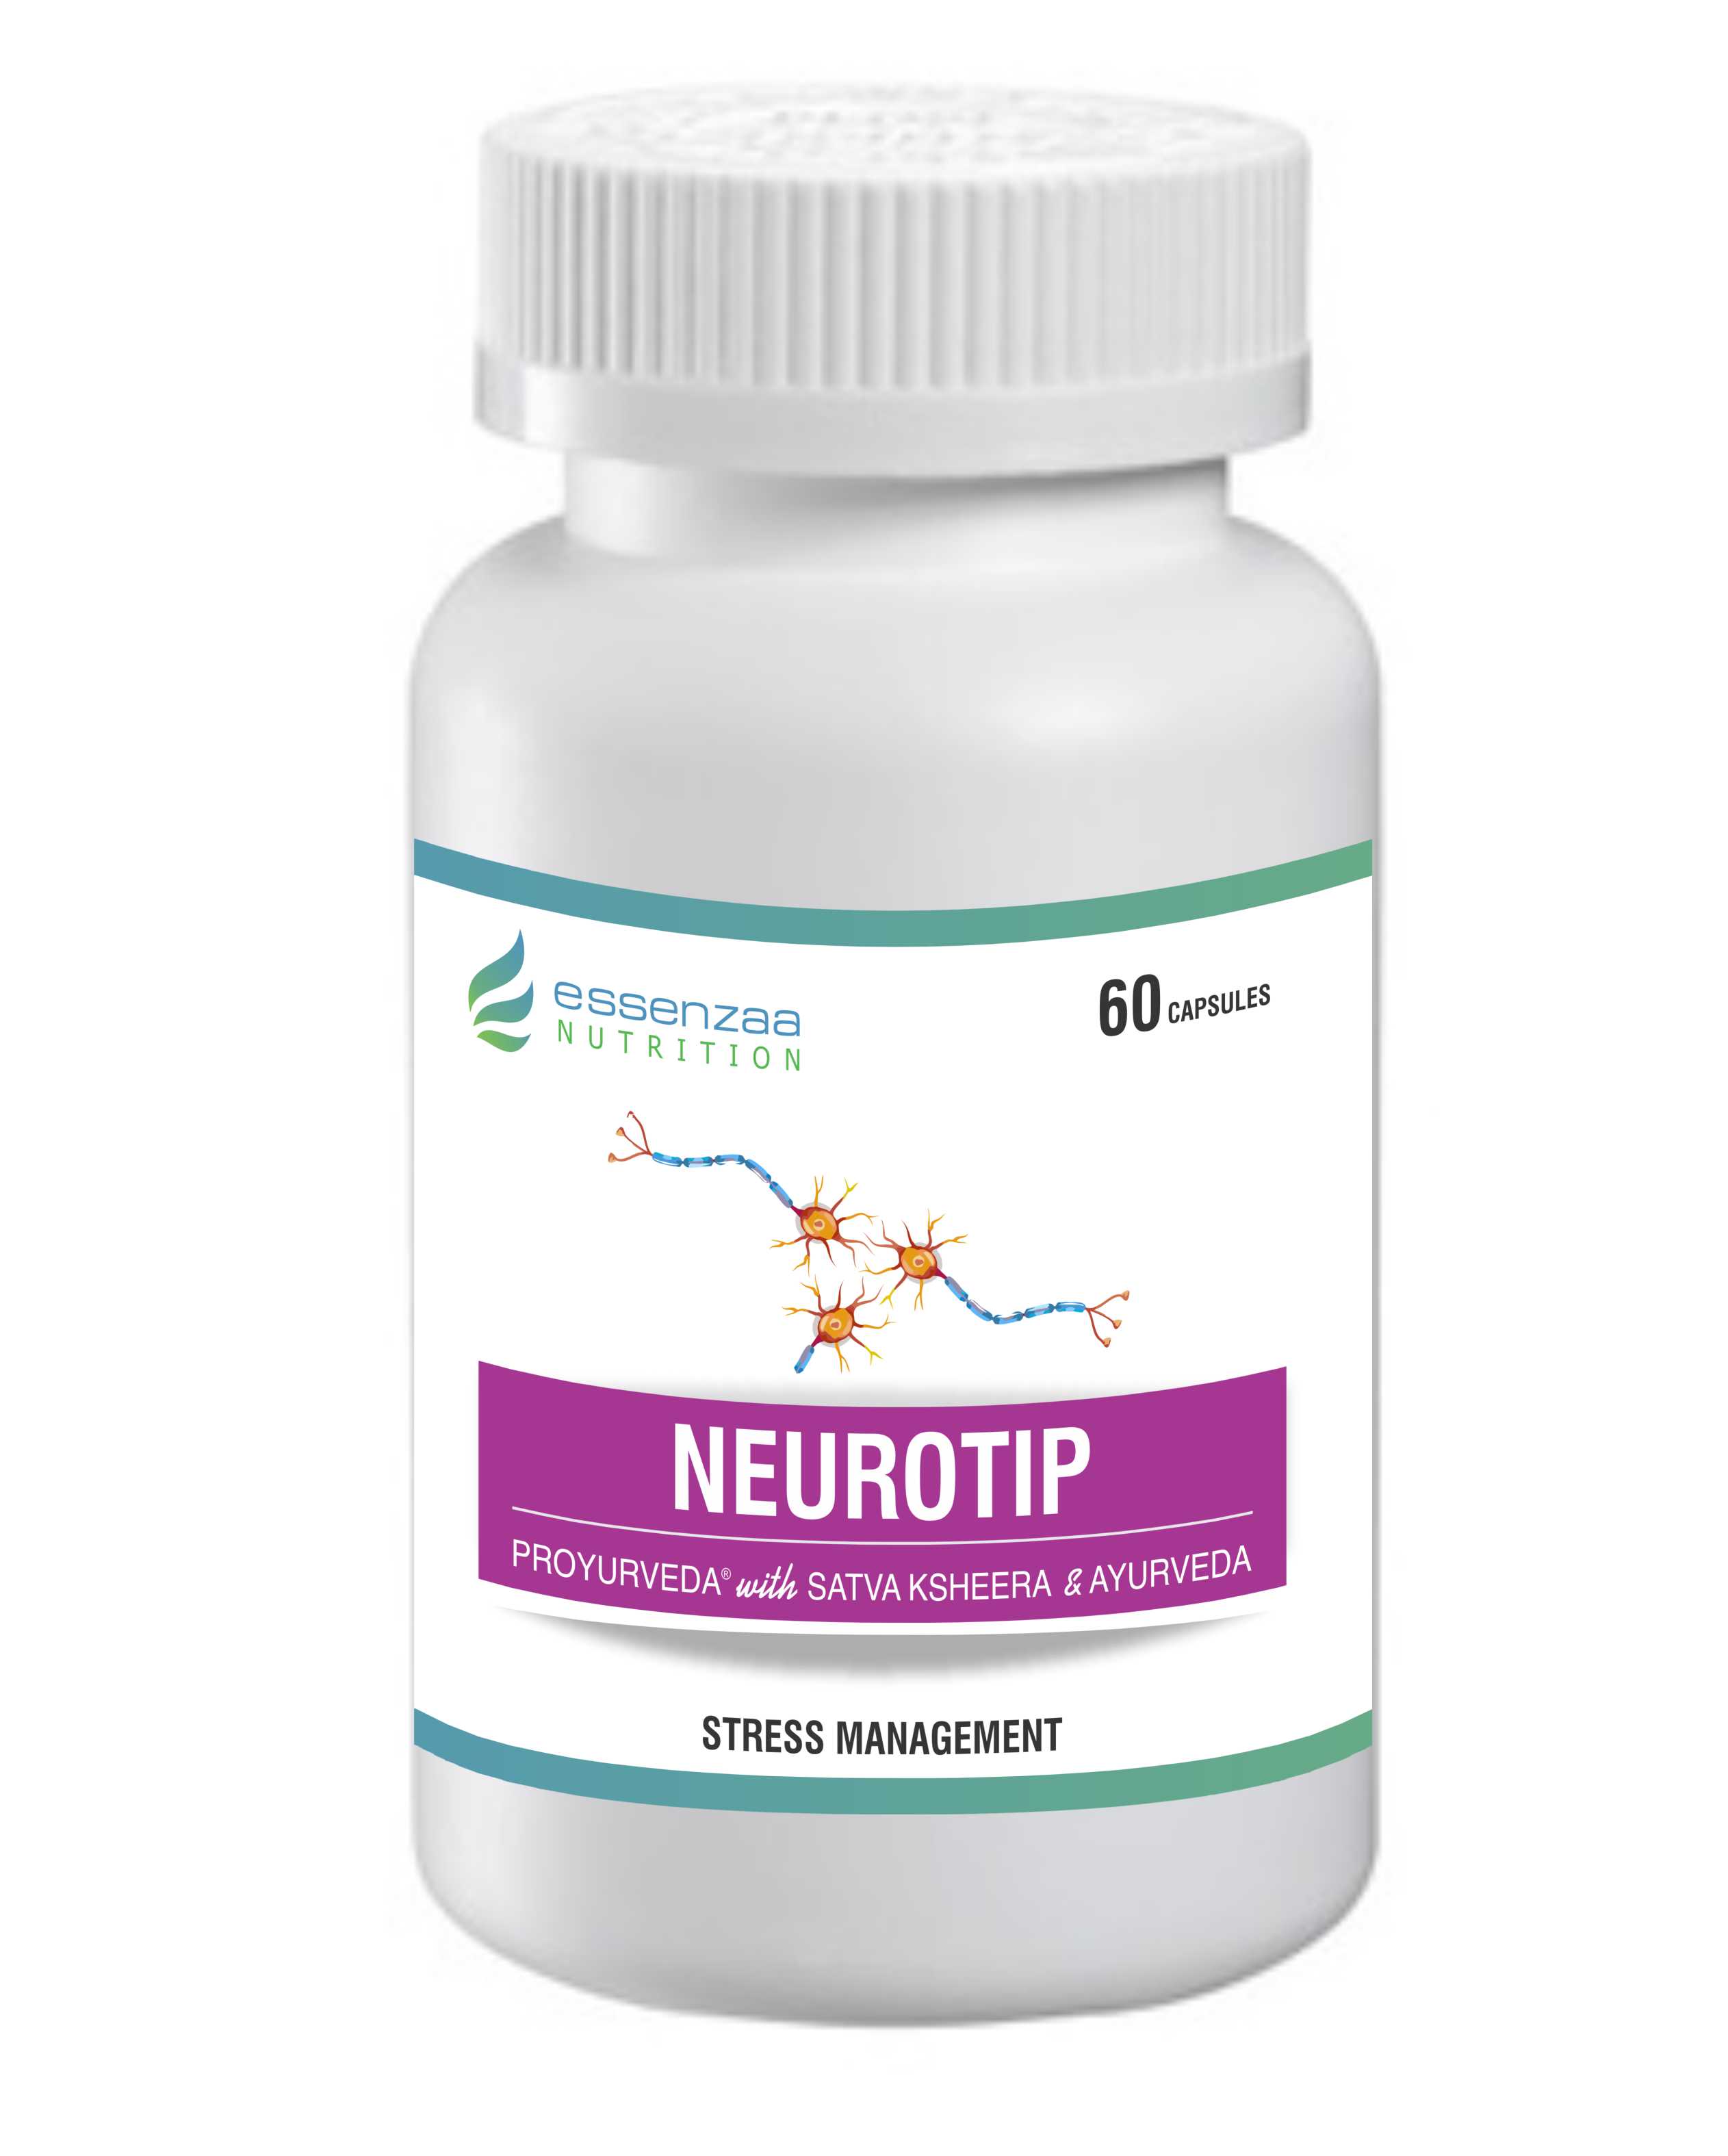 Buy Essenzaa Neurotip Capsule (Maximaa Proyurveda Neurotip Capsule) at Best Price Online